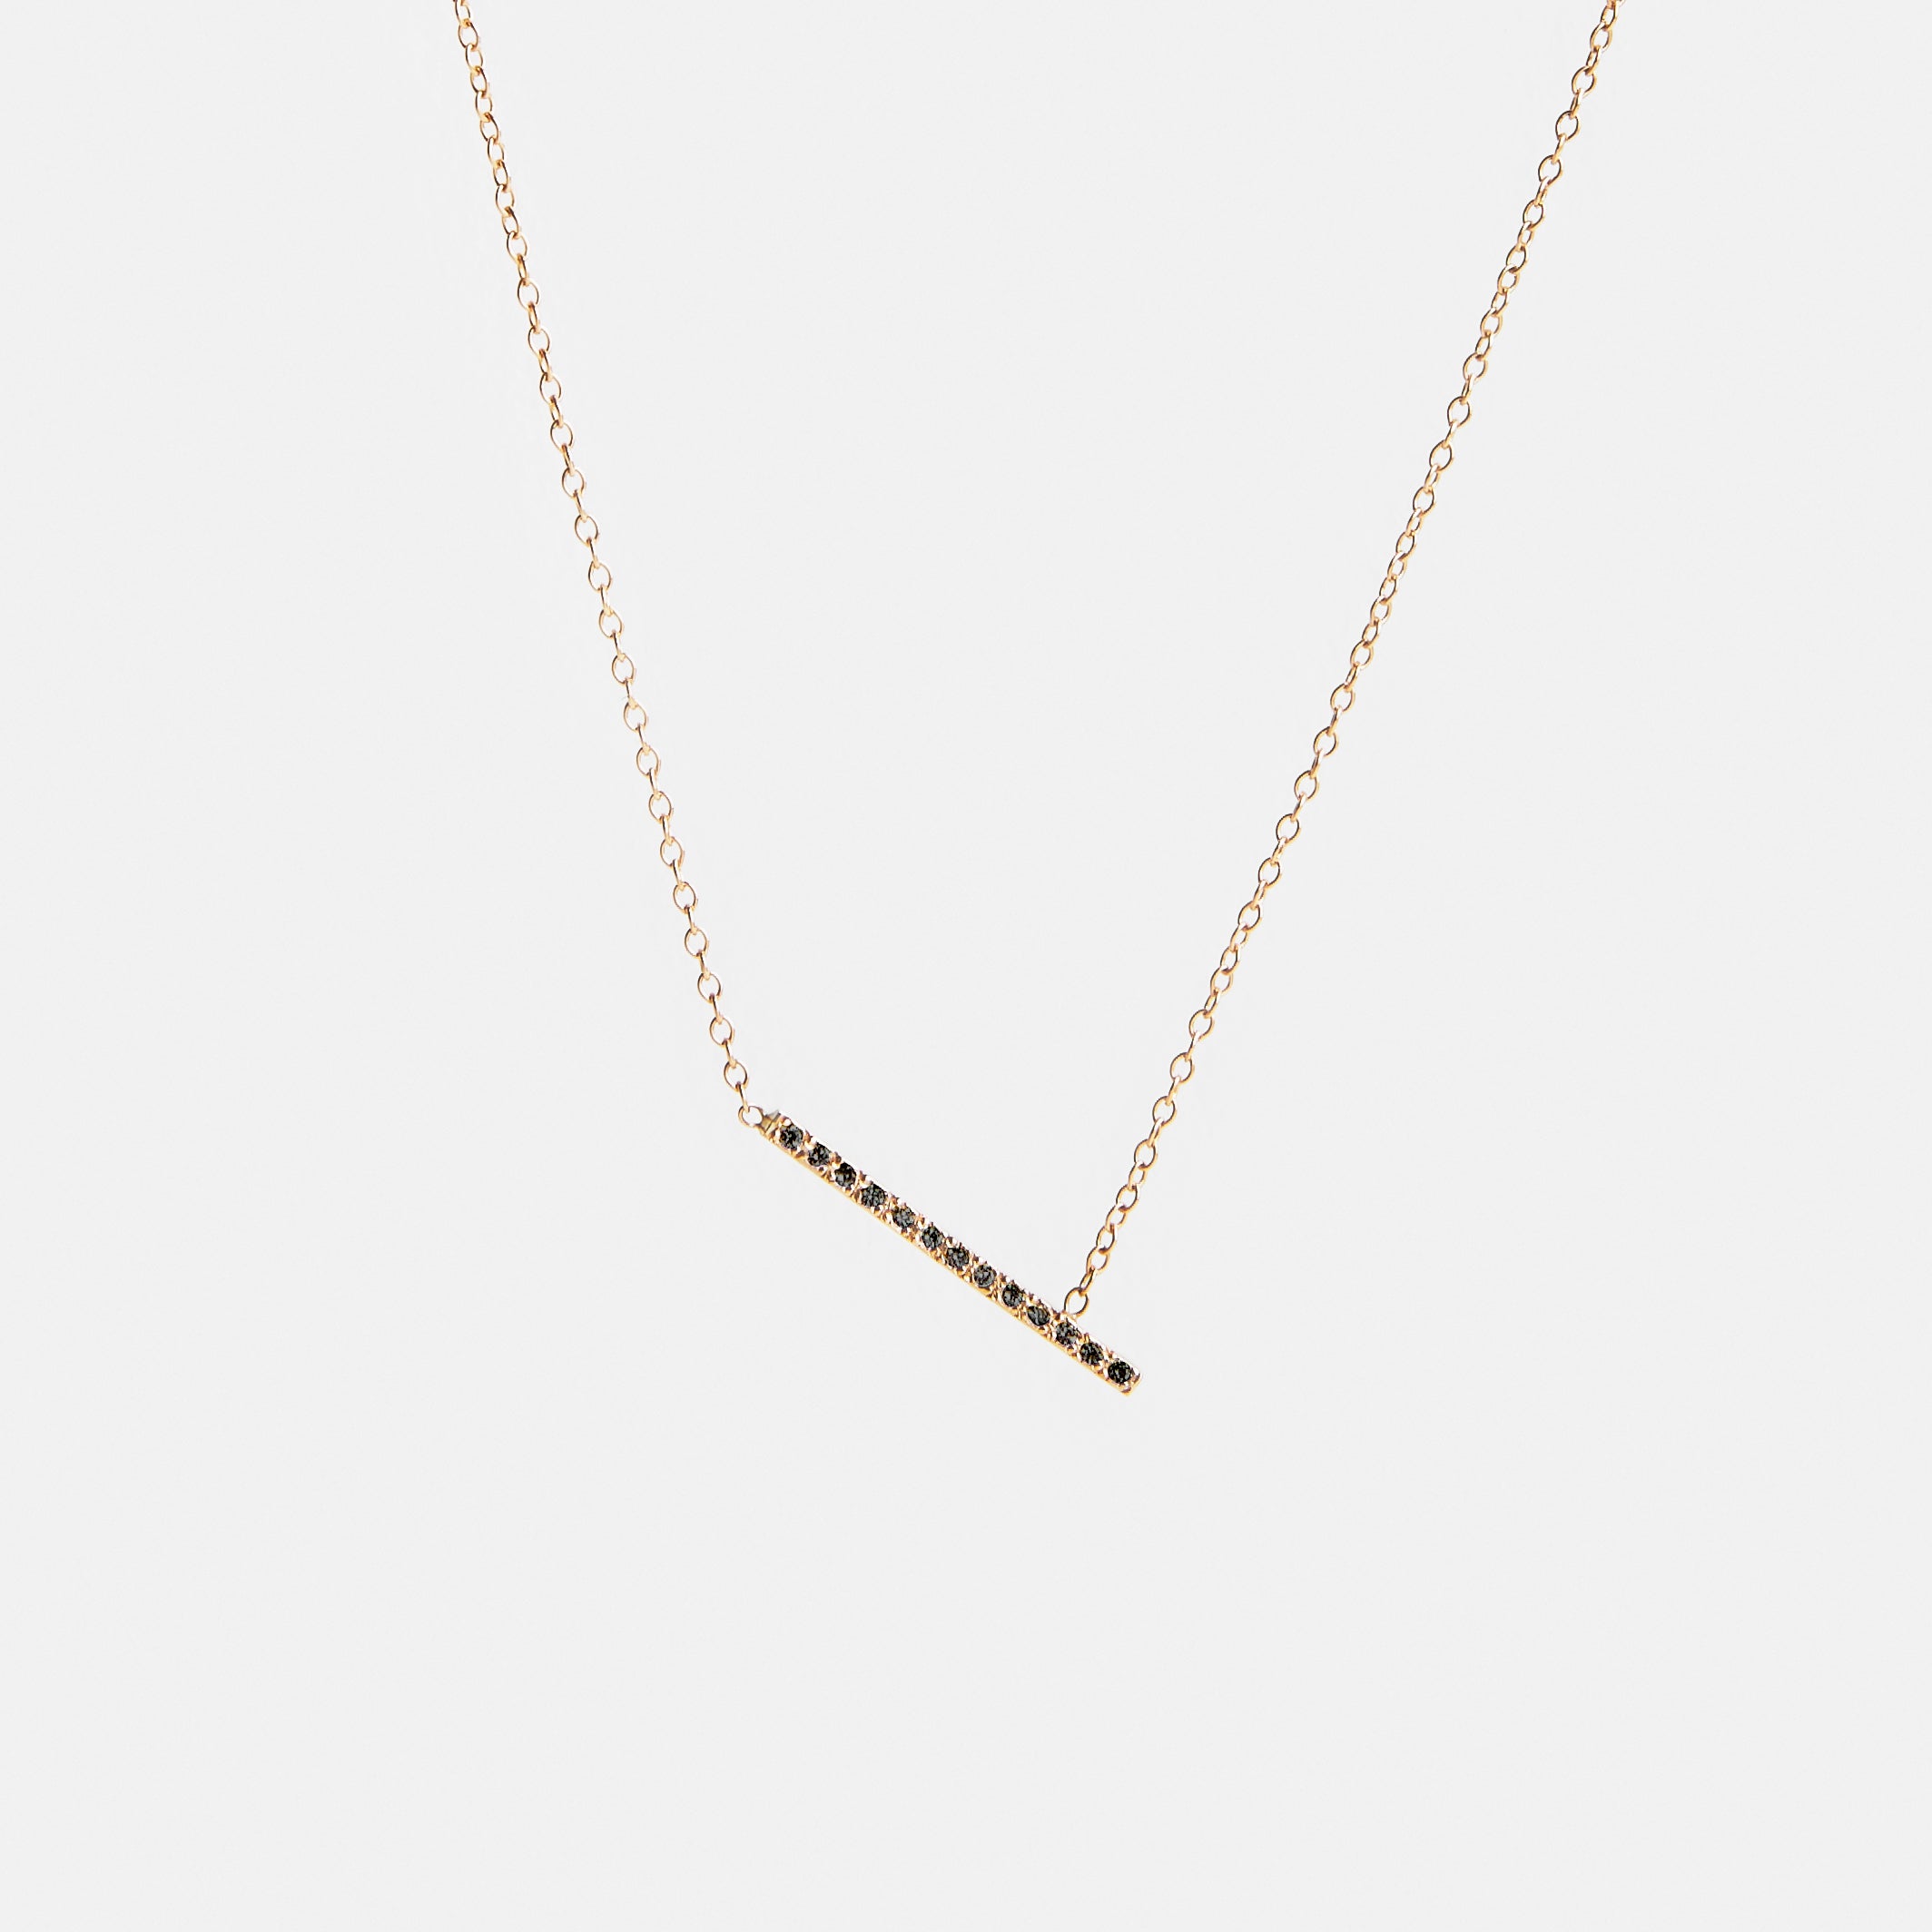 Tira Alternative Necklace in 14k Gold set with Black Diamonds By SHW Fine Jewelry NYC